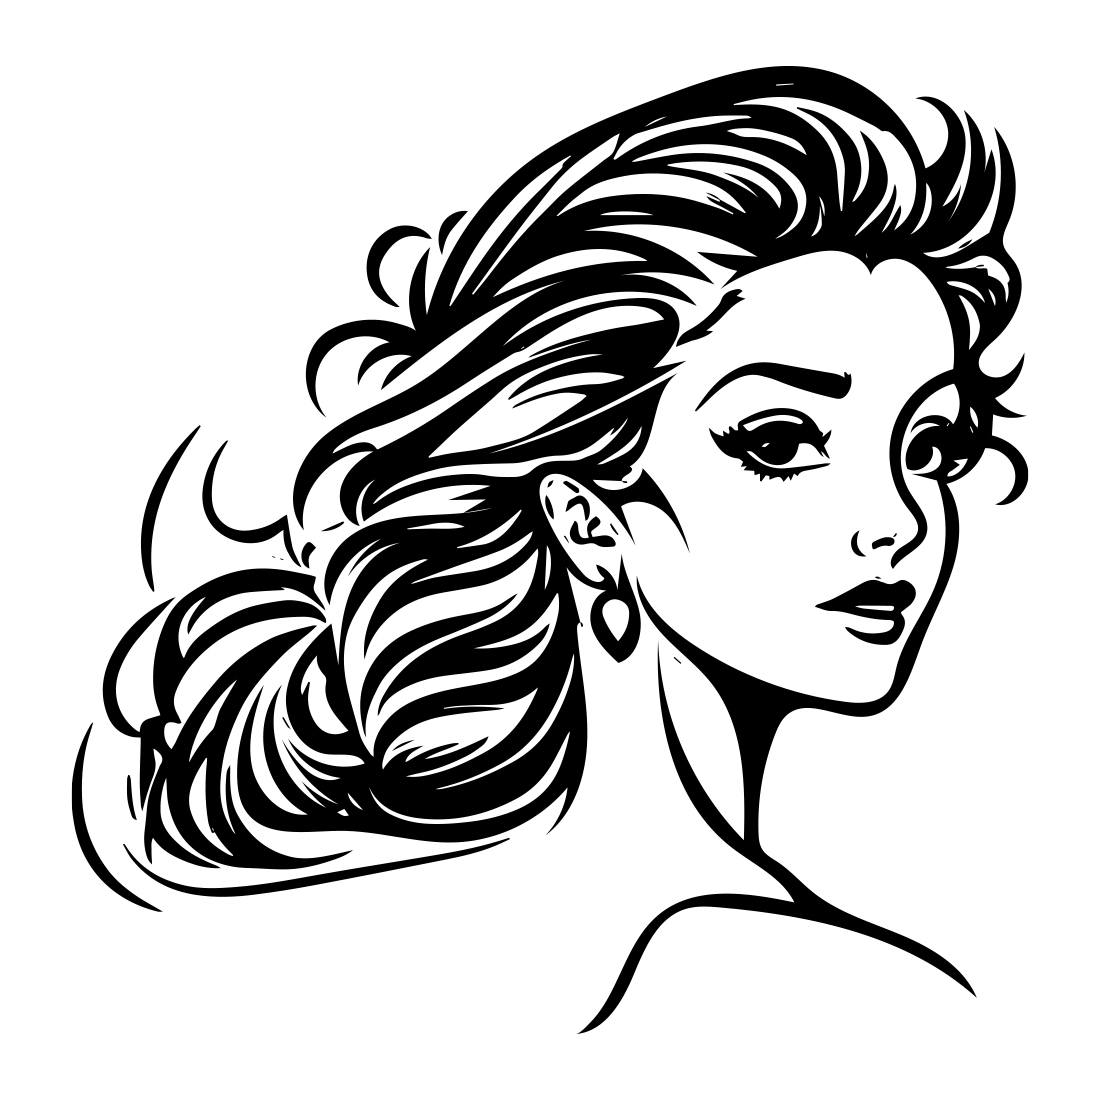 hair beauty salon logo